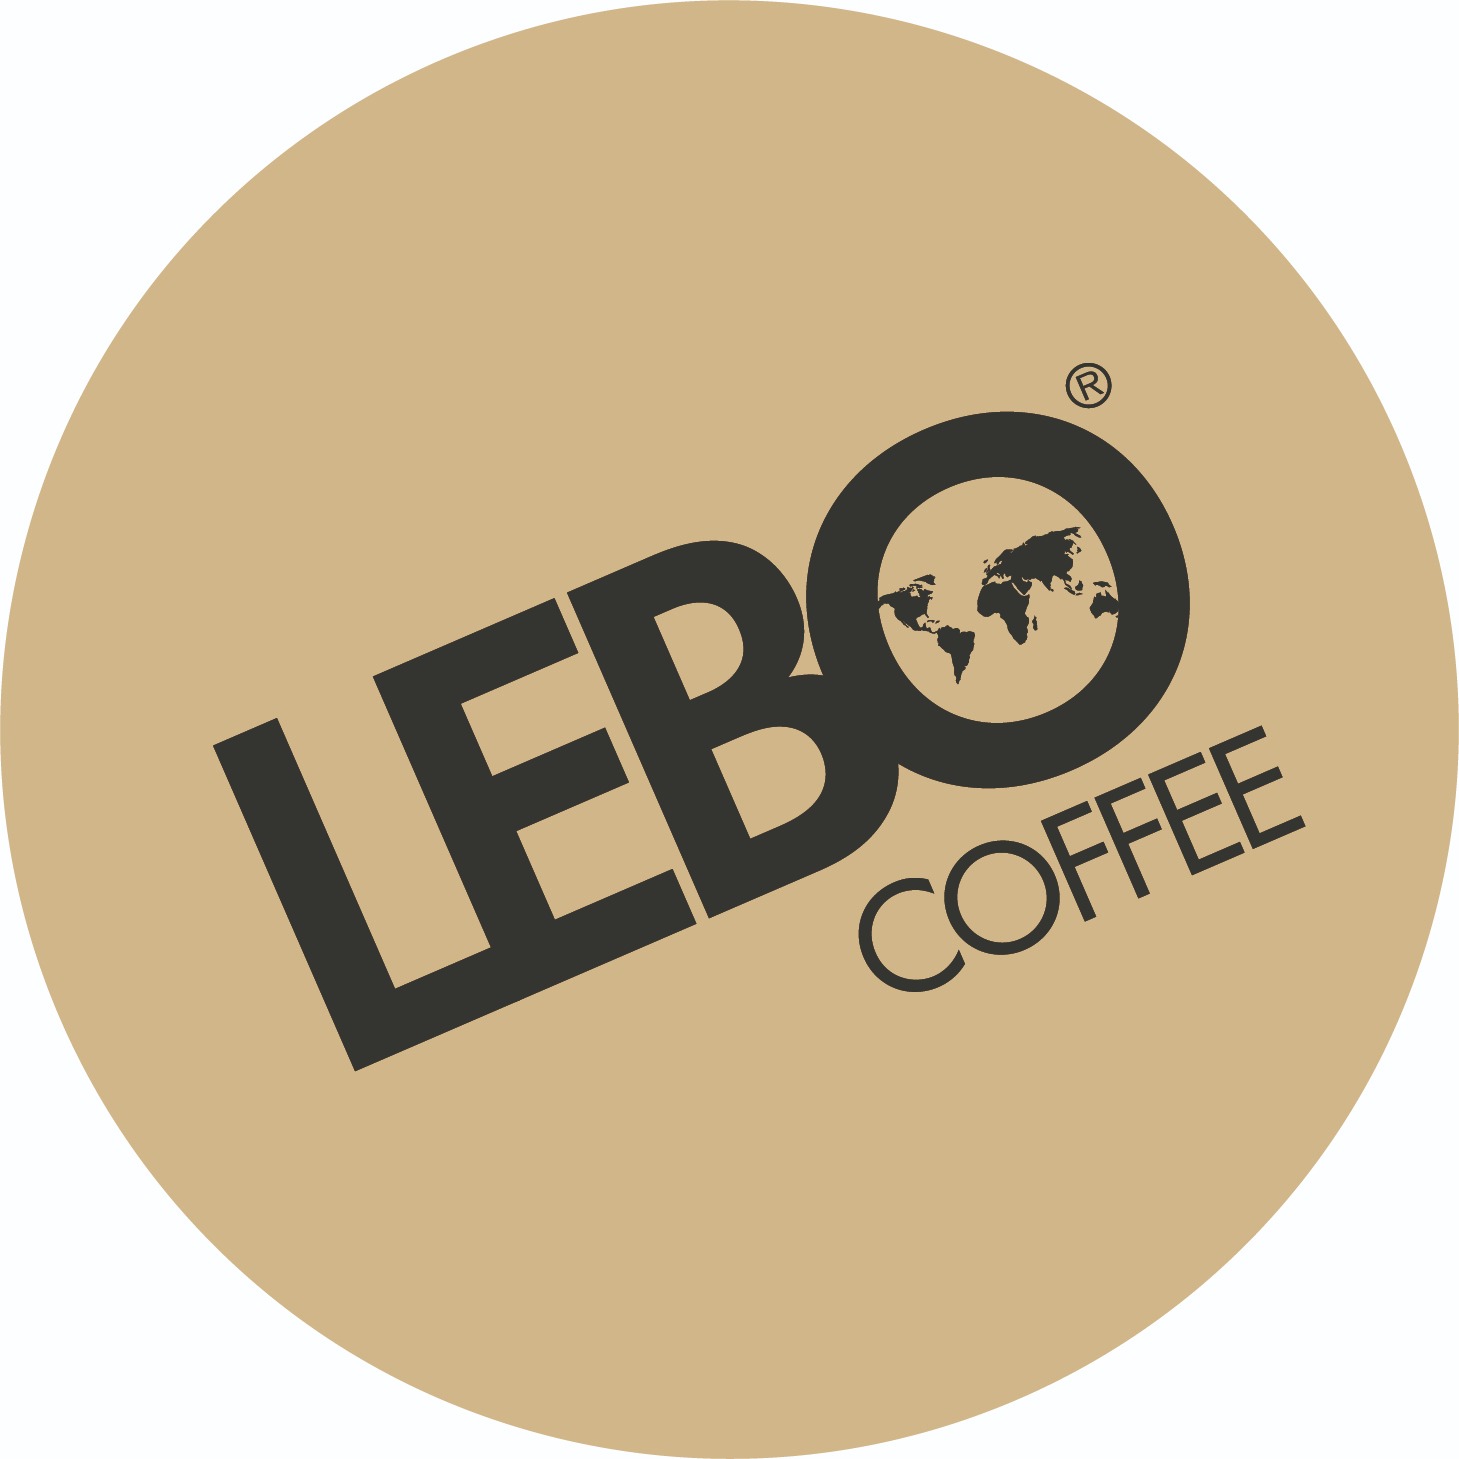 lebo coffee